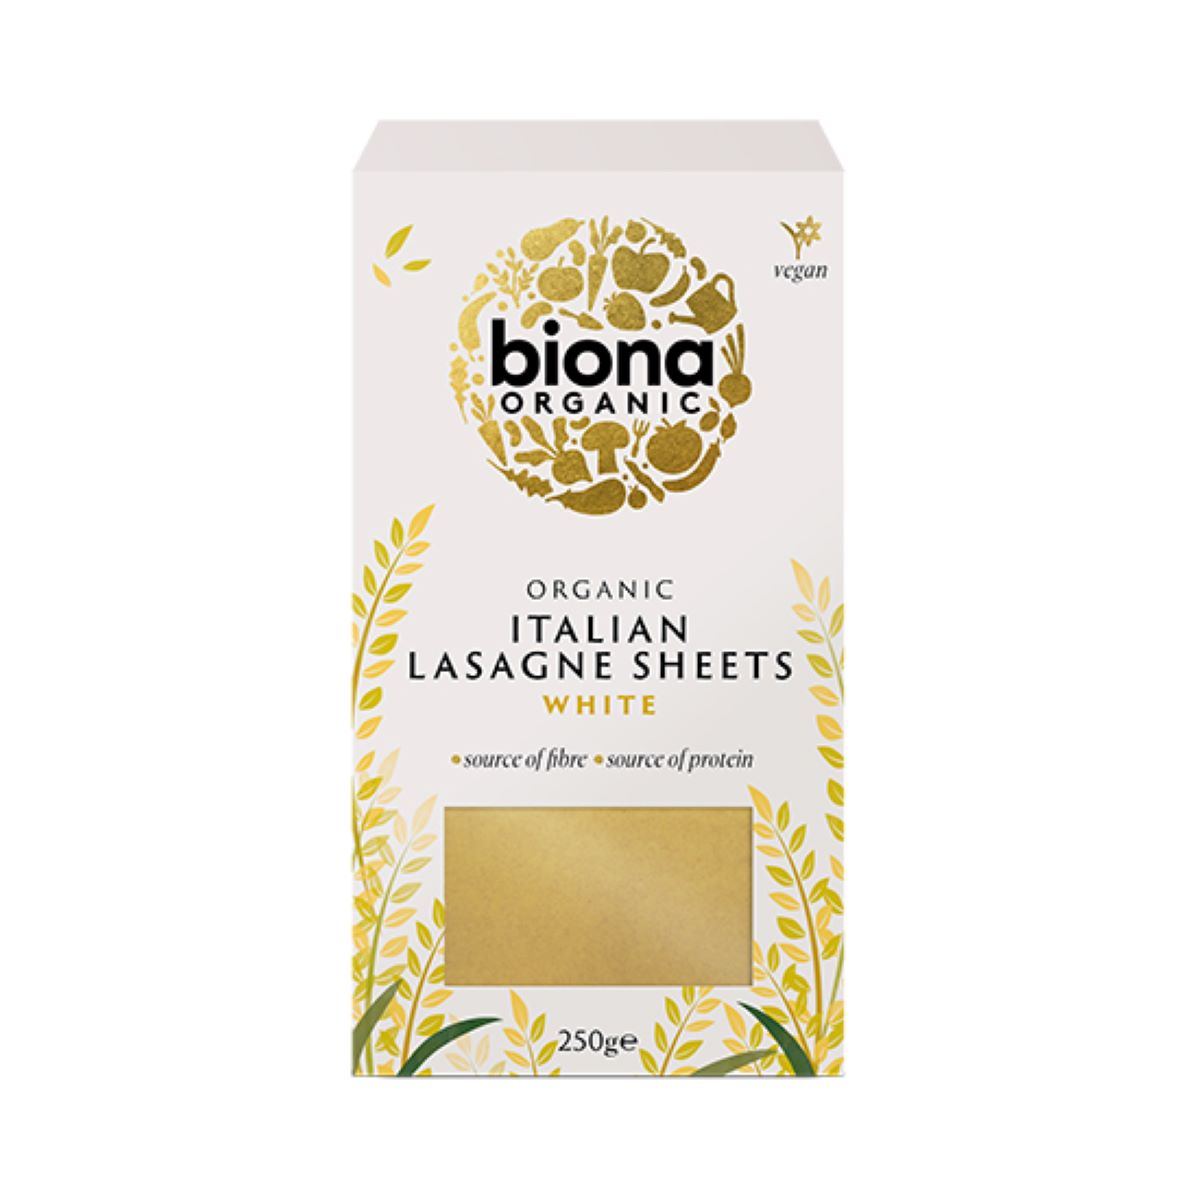 Biona Organic Lasagne Sheets White 250g